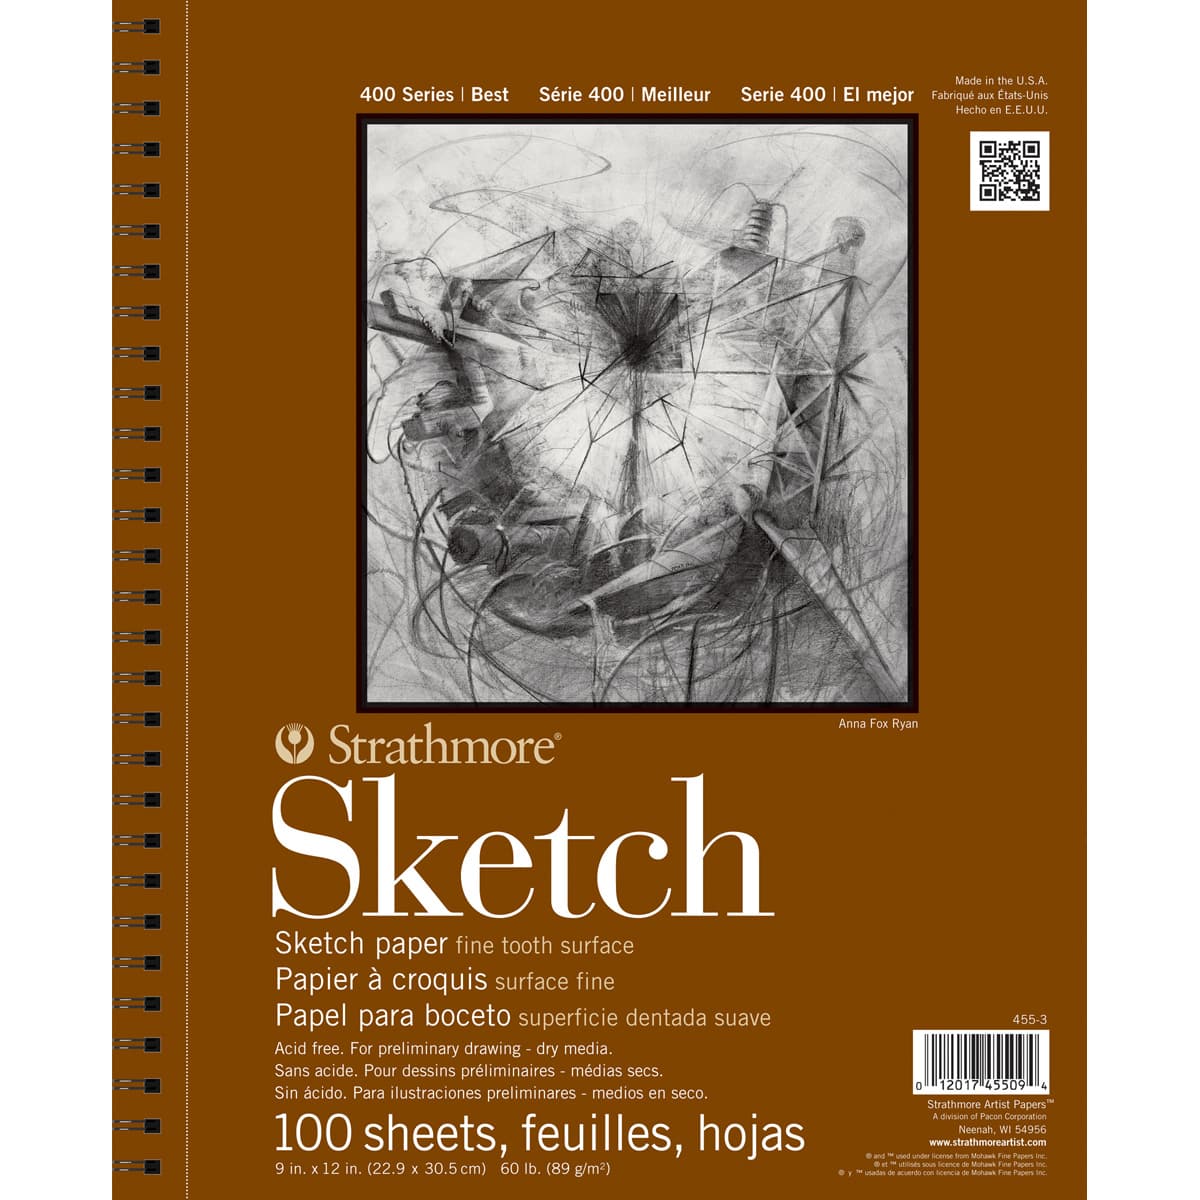 Personalized Leather sketchbook cover for Strathmore sketchbook Sketch Paper